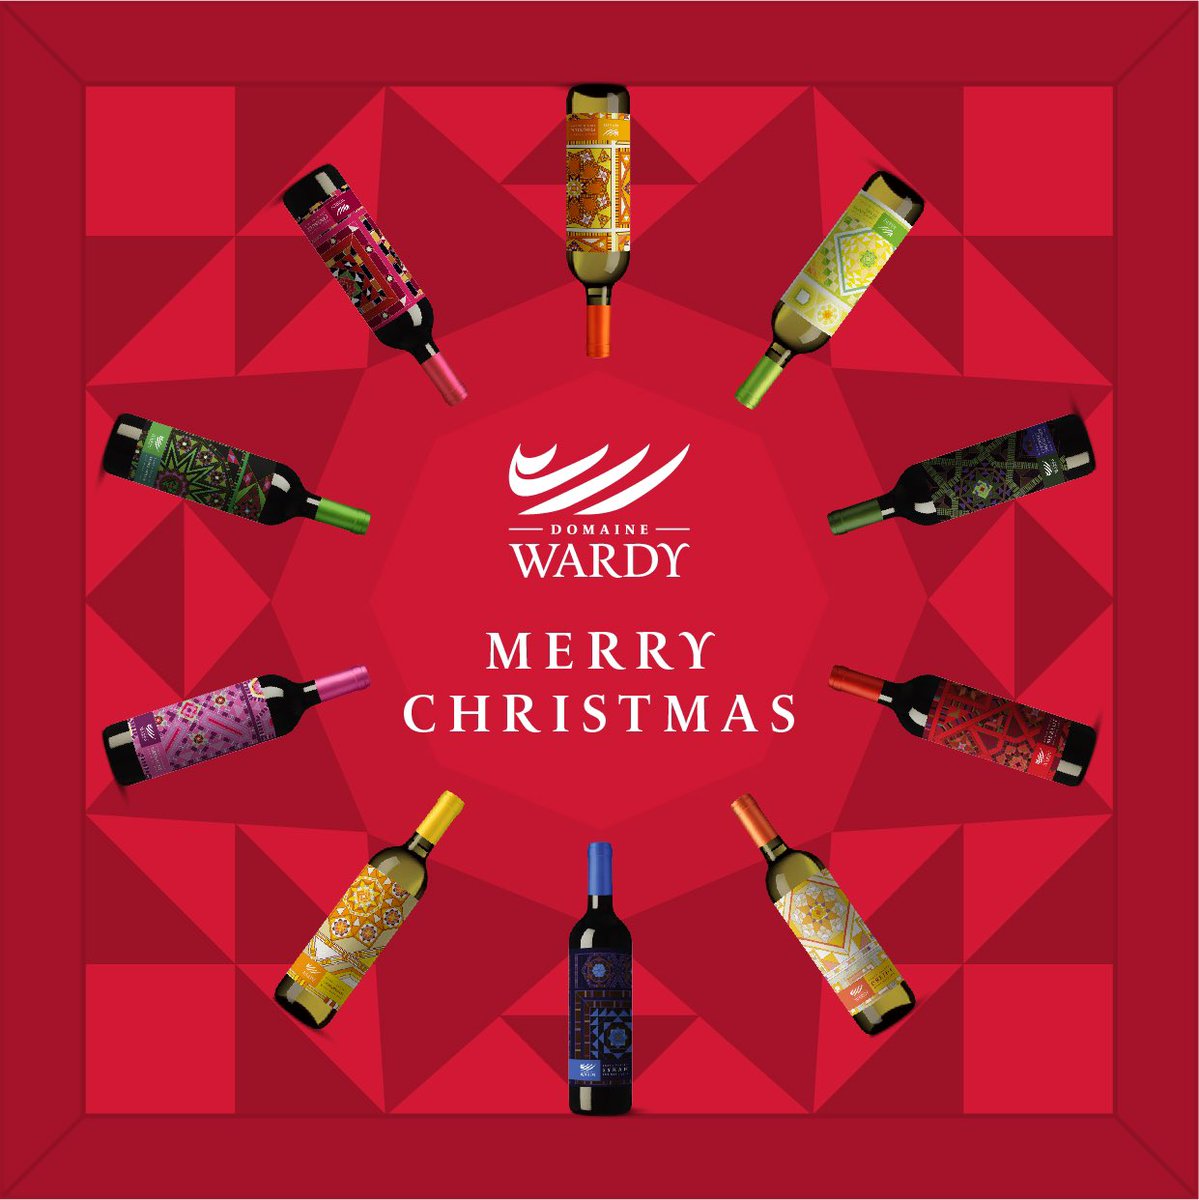 Wishing all a very Merry Christmas 
#domainewardy #wine #redwine #whitewine #atrissi #winedesign #christmas #winesoflebanon #lebanesewineries #finewine #premiumwine #awardwinning #awardwinningwines #vegan #holidaywine #christmaswine #merrychristmas #zahle #lebanon #familybusiness